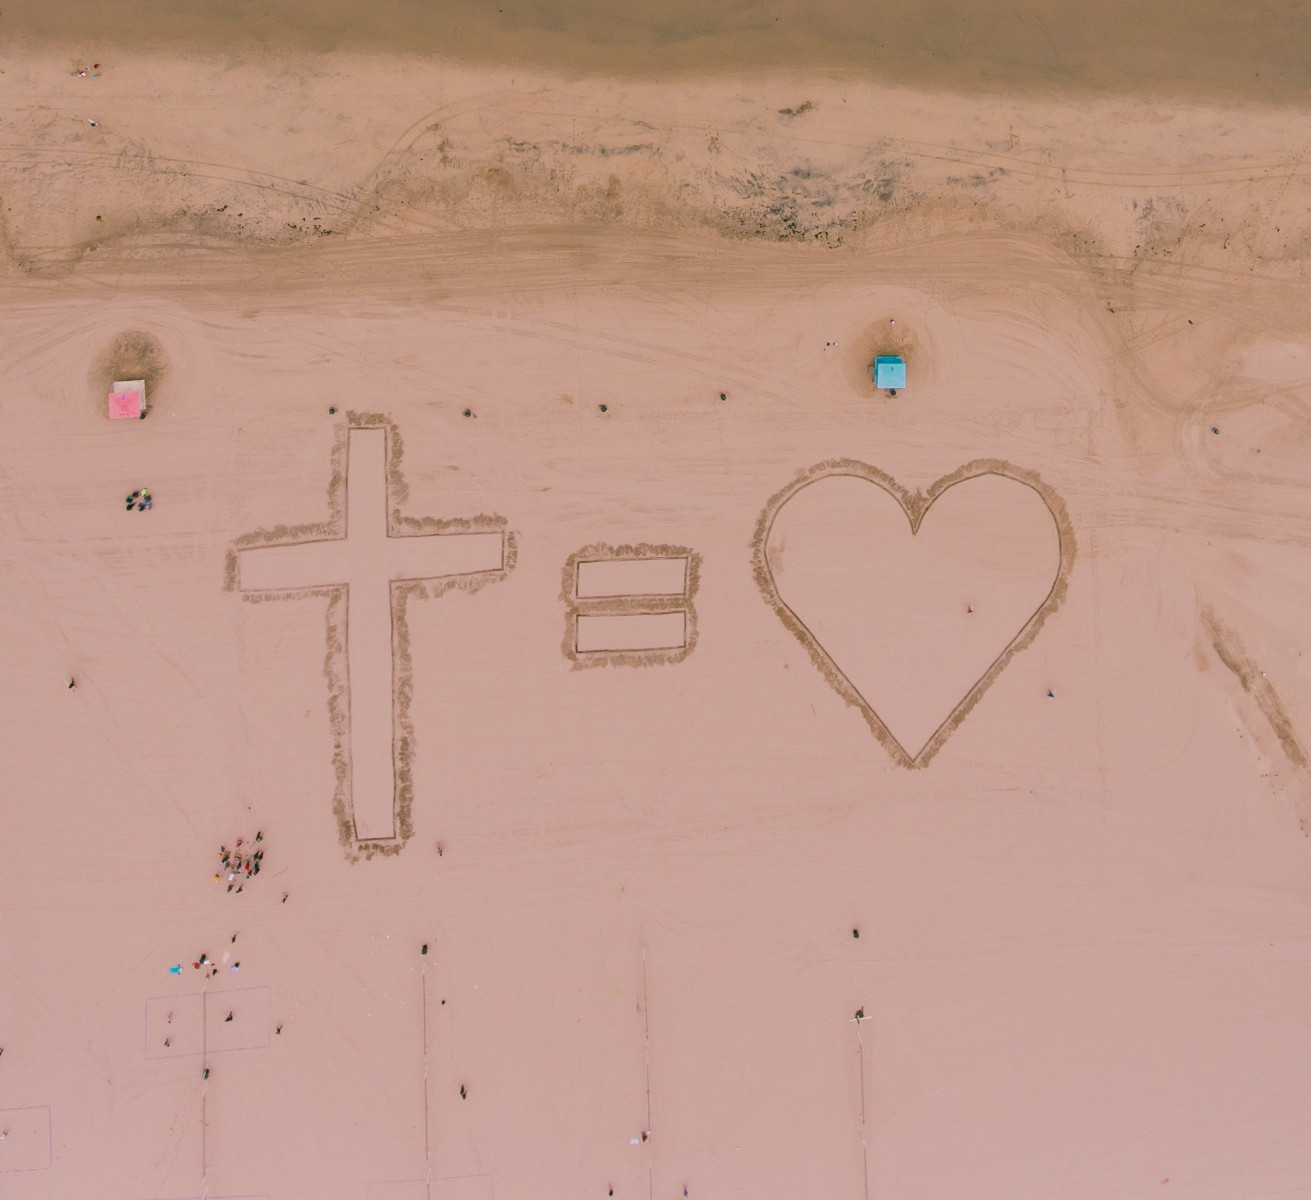 "the cross = love" written in the sand